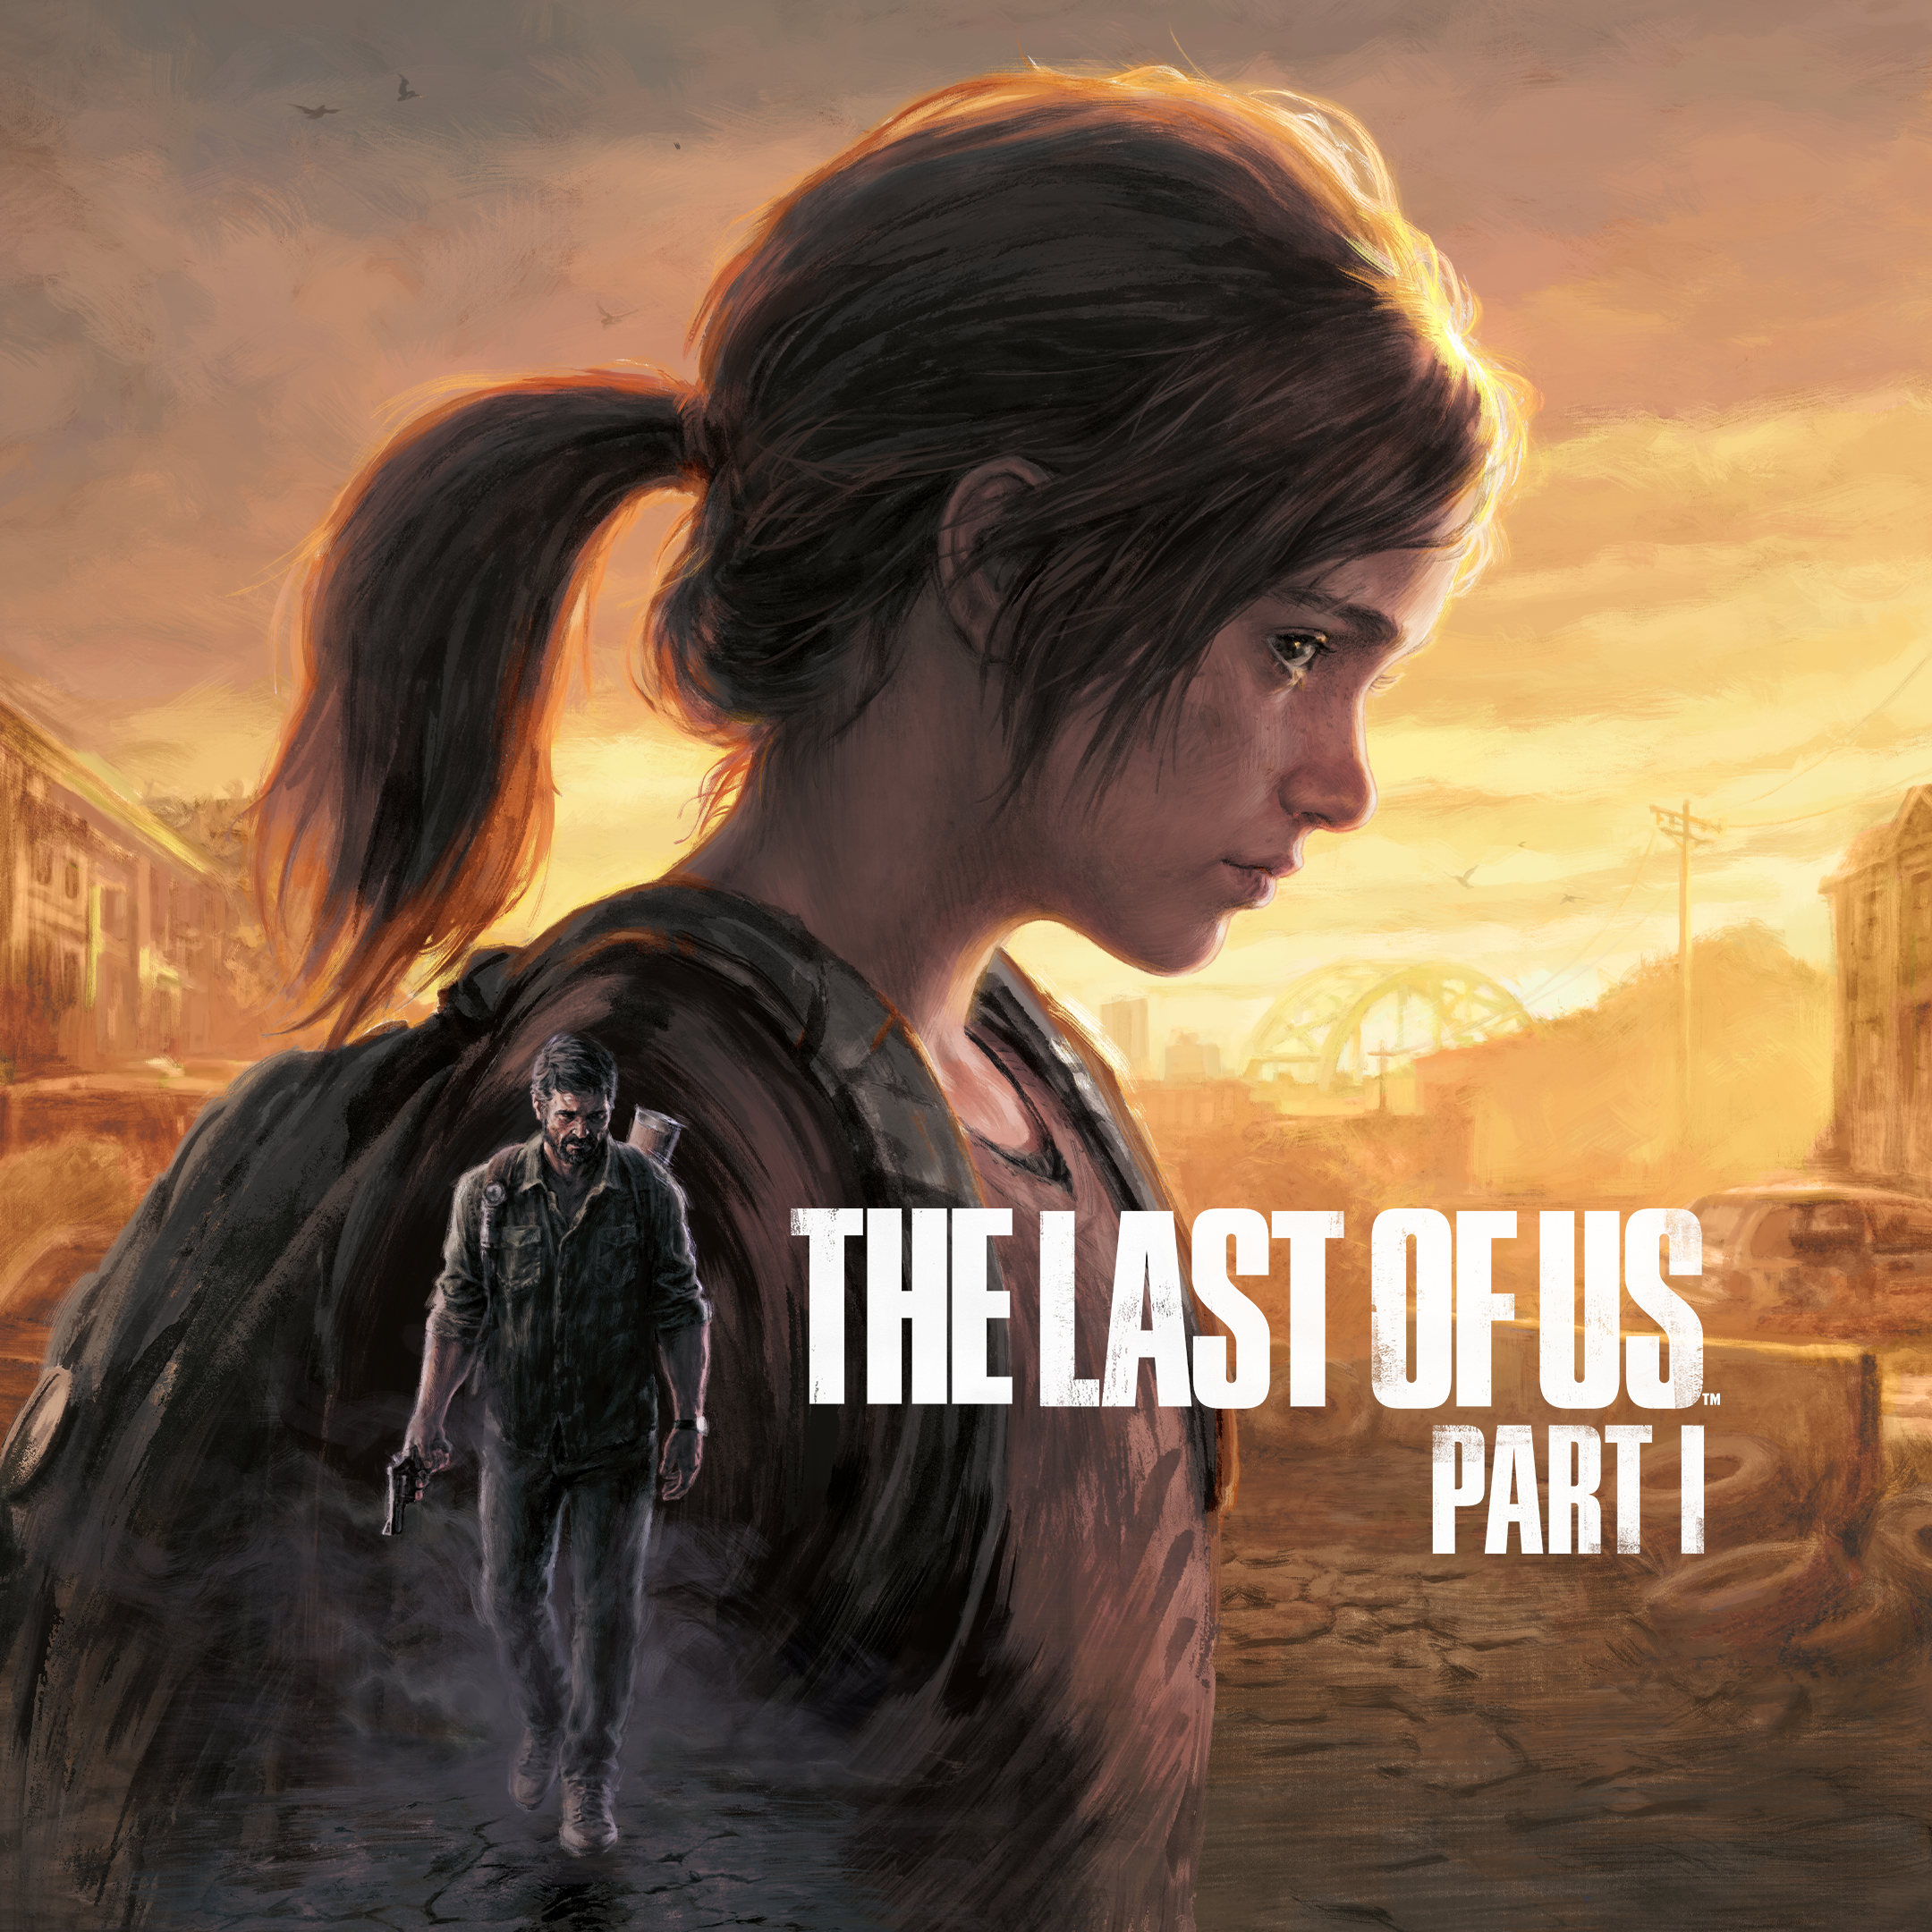 The Last of Us Episode 3 Cinematography. : r/thelastofus